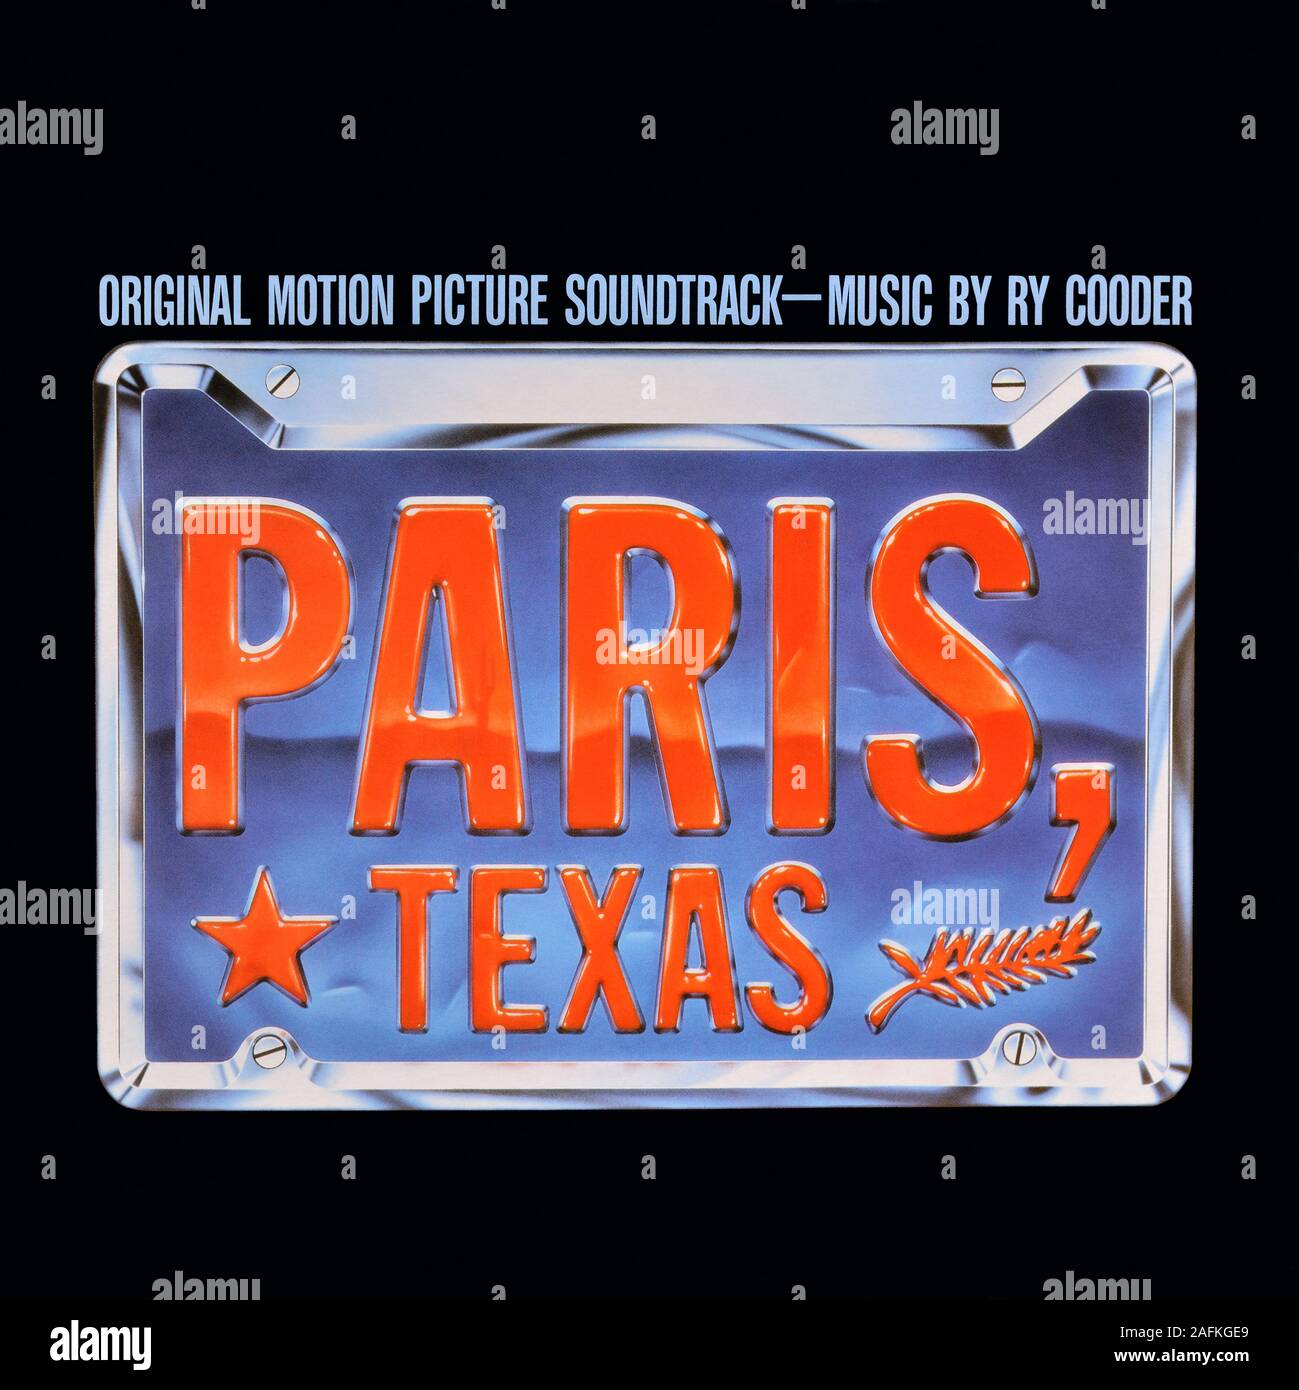 Ry Cooder - original vinyl album cover - Paris, Texas (Original Motion Picture Soundtrack) - 1985 Stock Photo